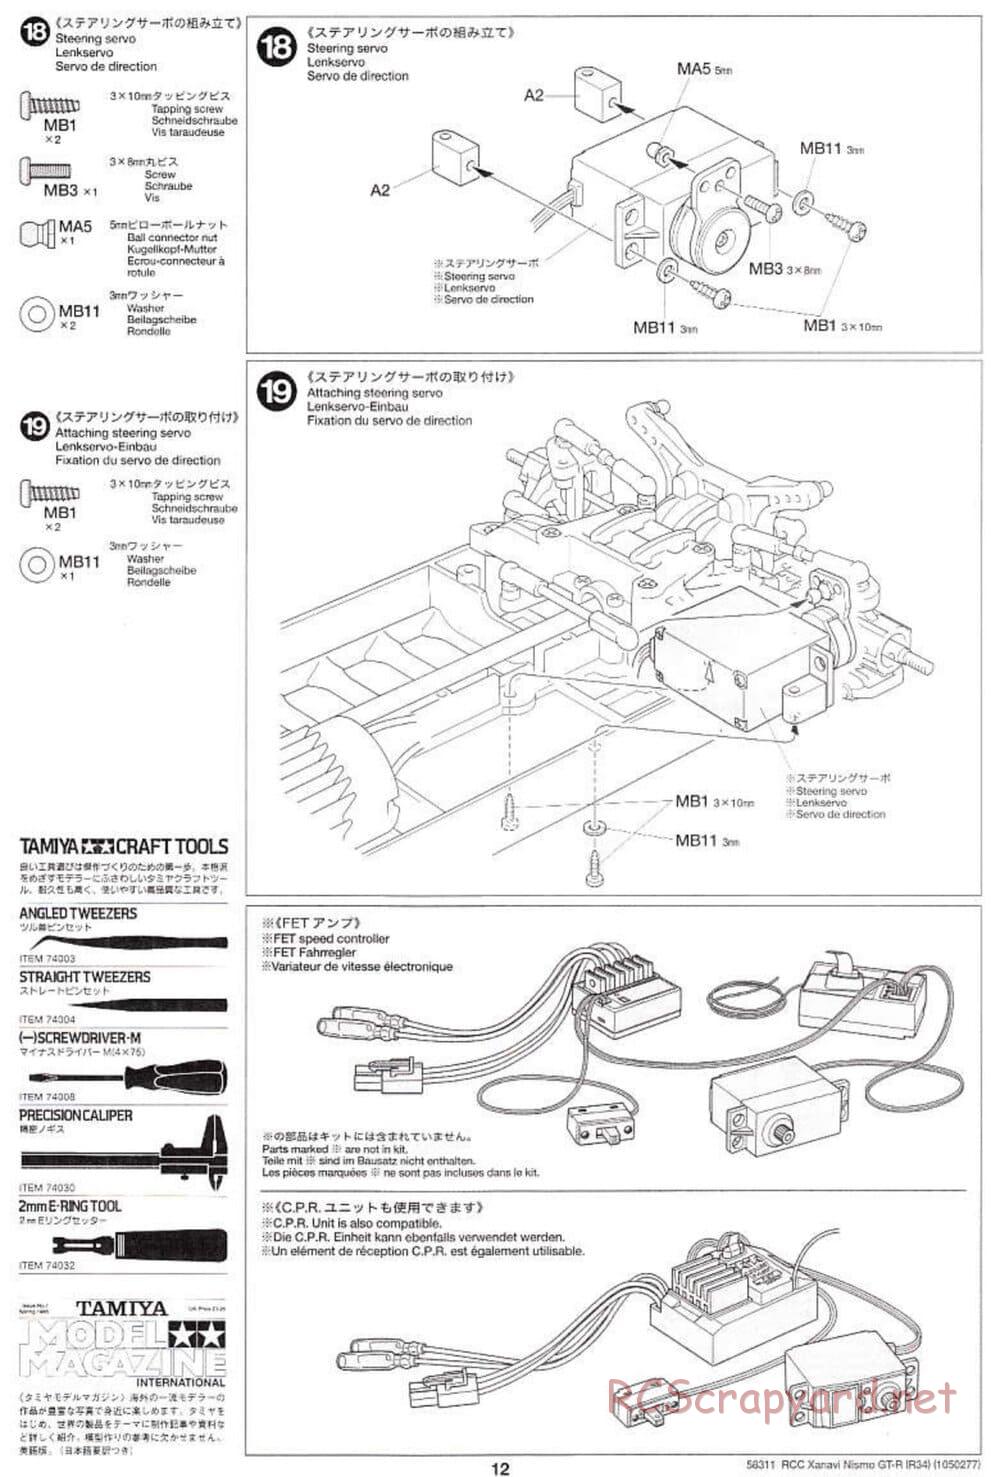 Tamiya - Xanavi Nismo GT-R (R34) - TB-02 Chassis - Manual - Page 12